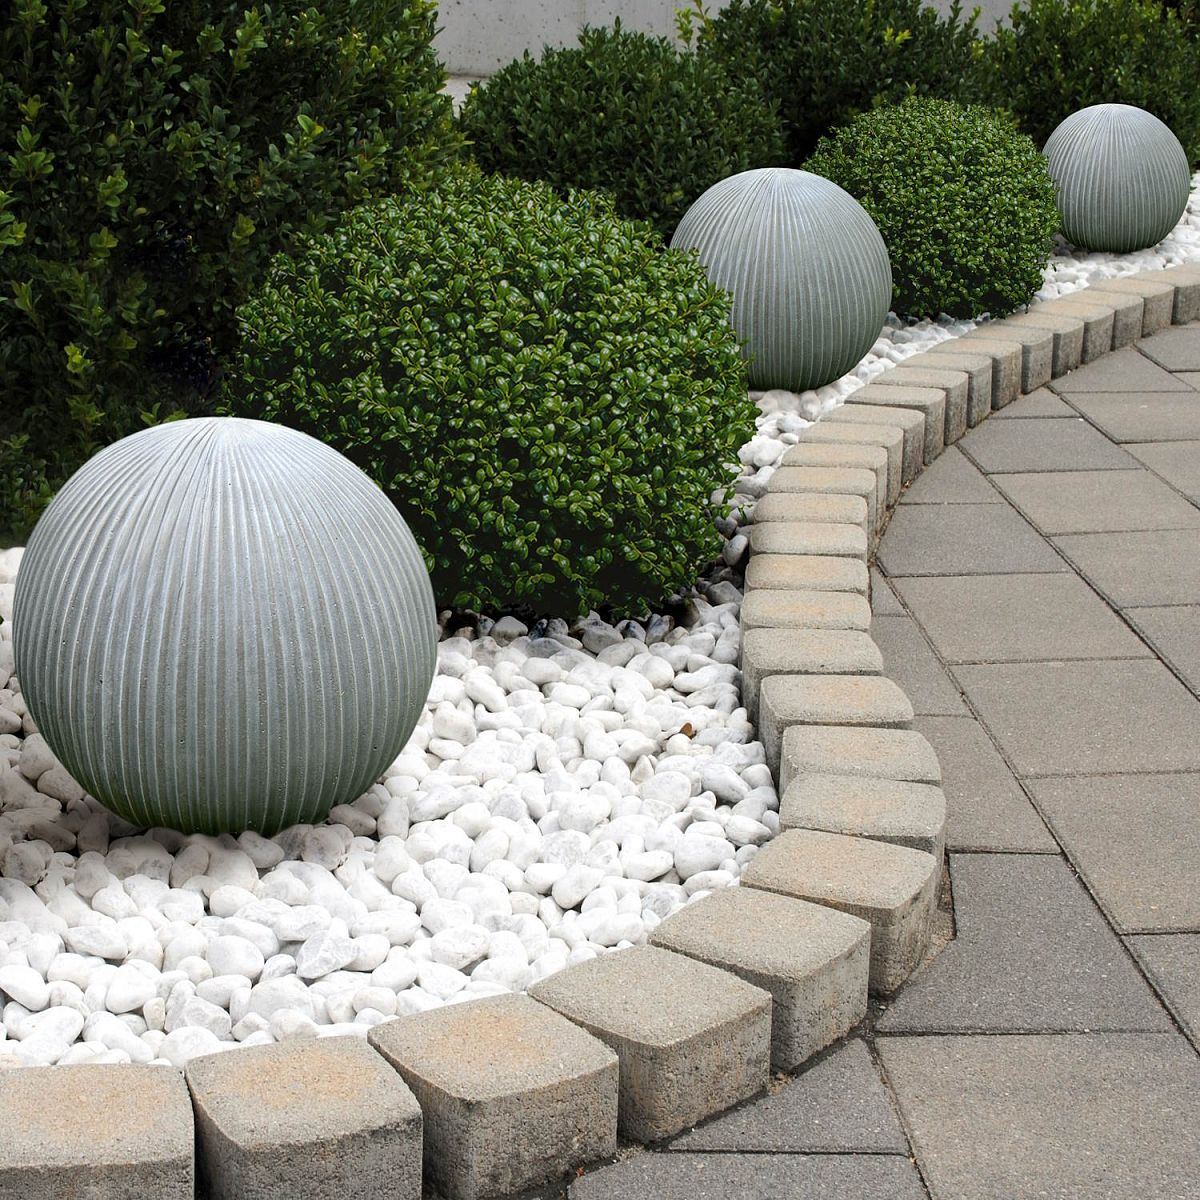 IDEALIST Lite Vertical Ribbed Outdoor Garden Decorative Ball